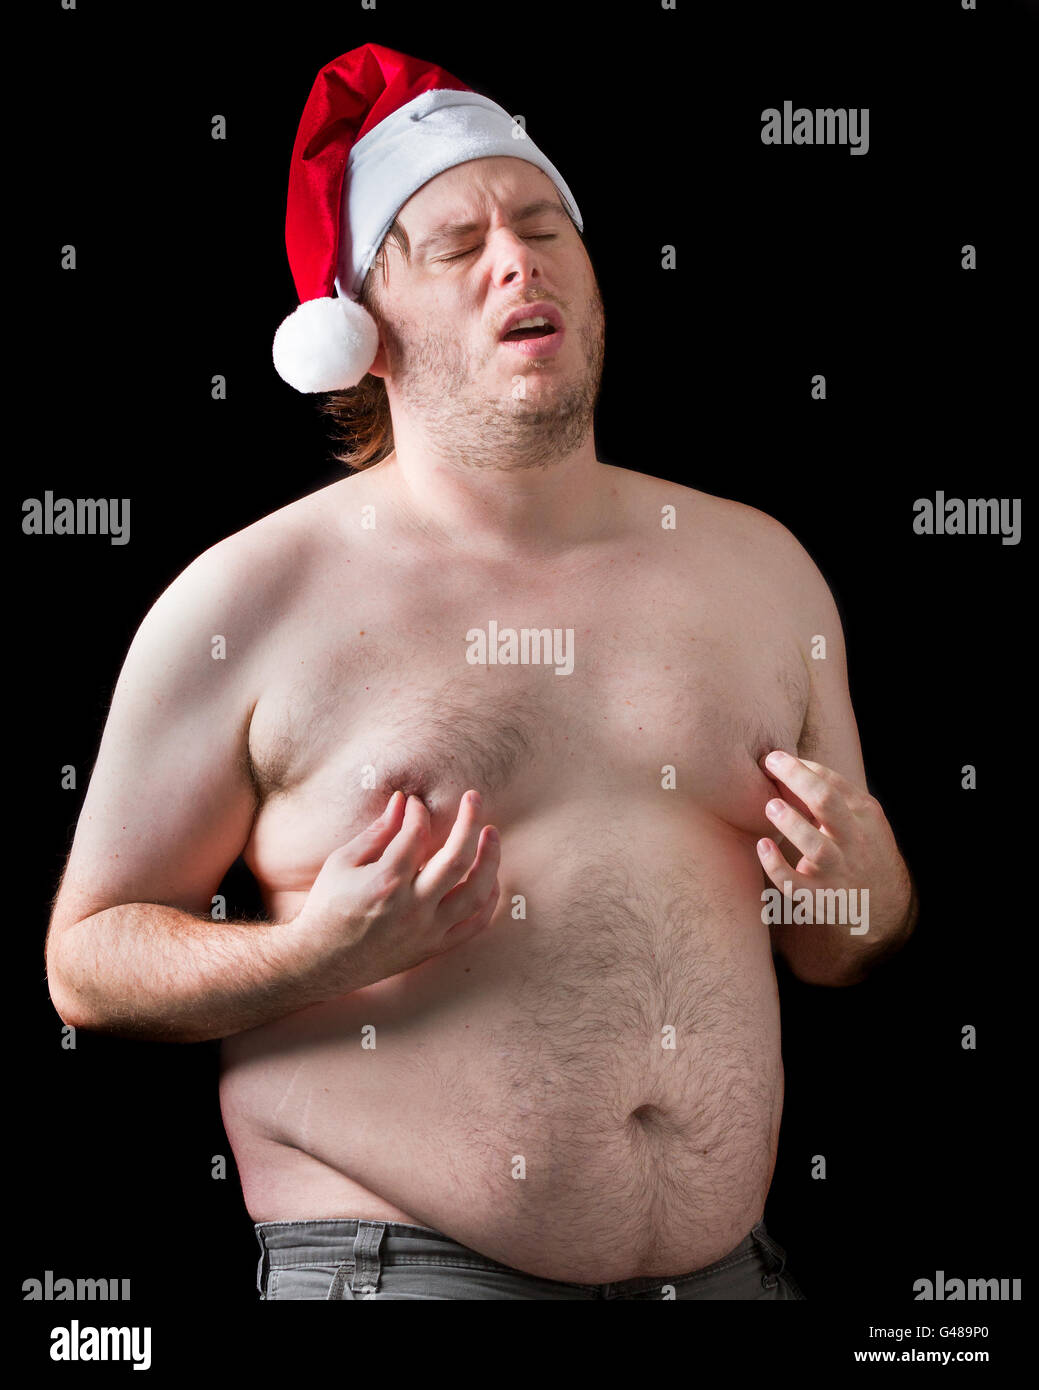 Fat guy nipples